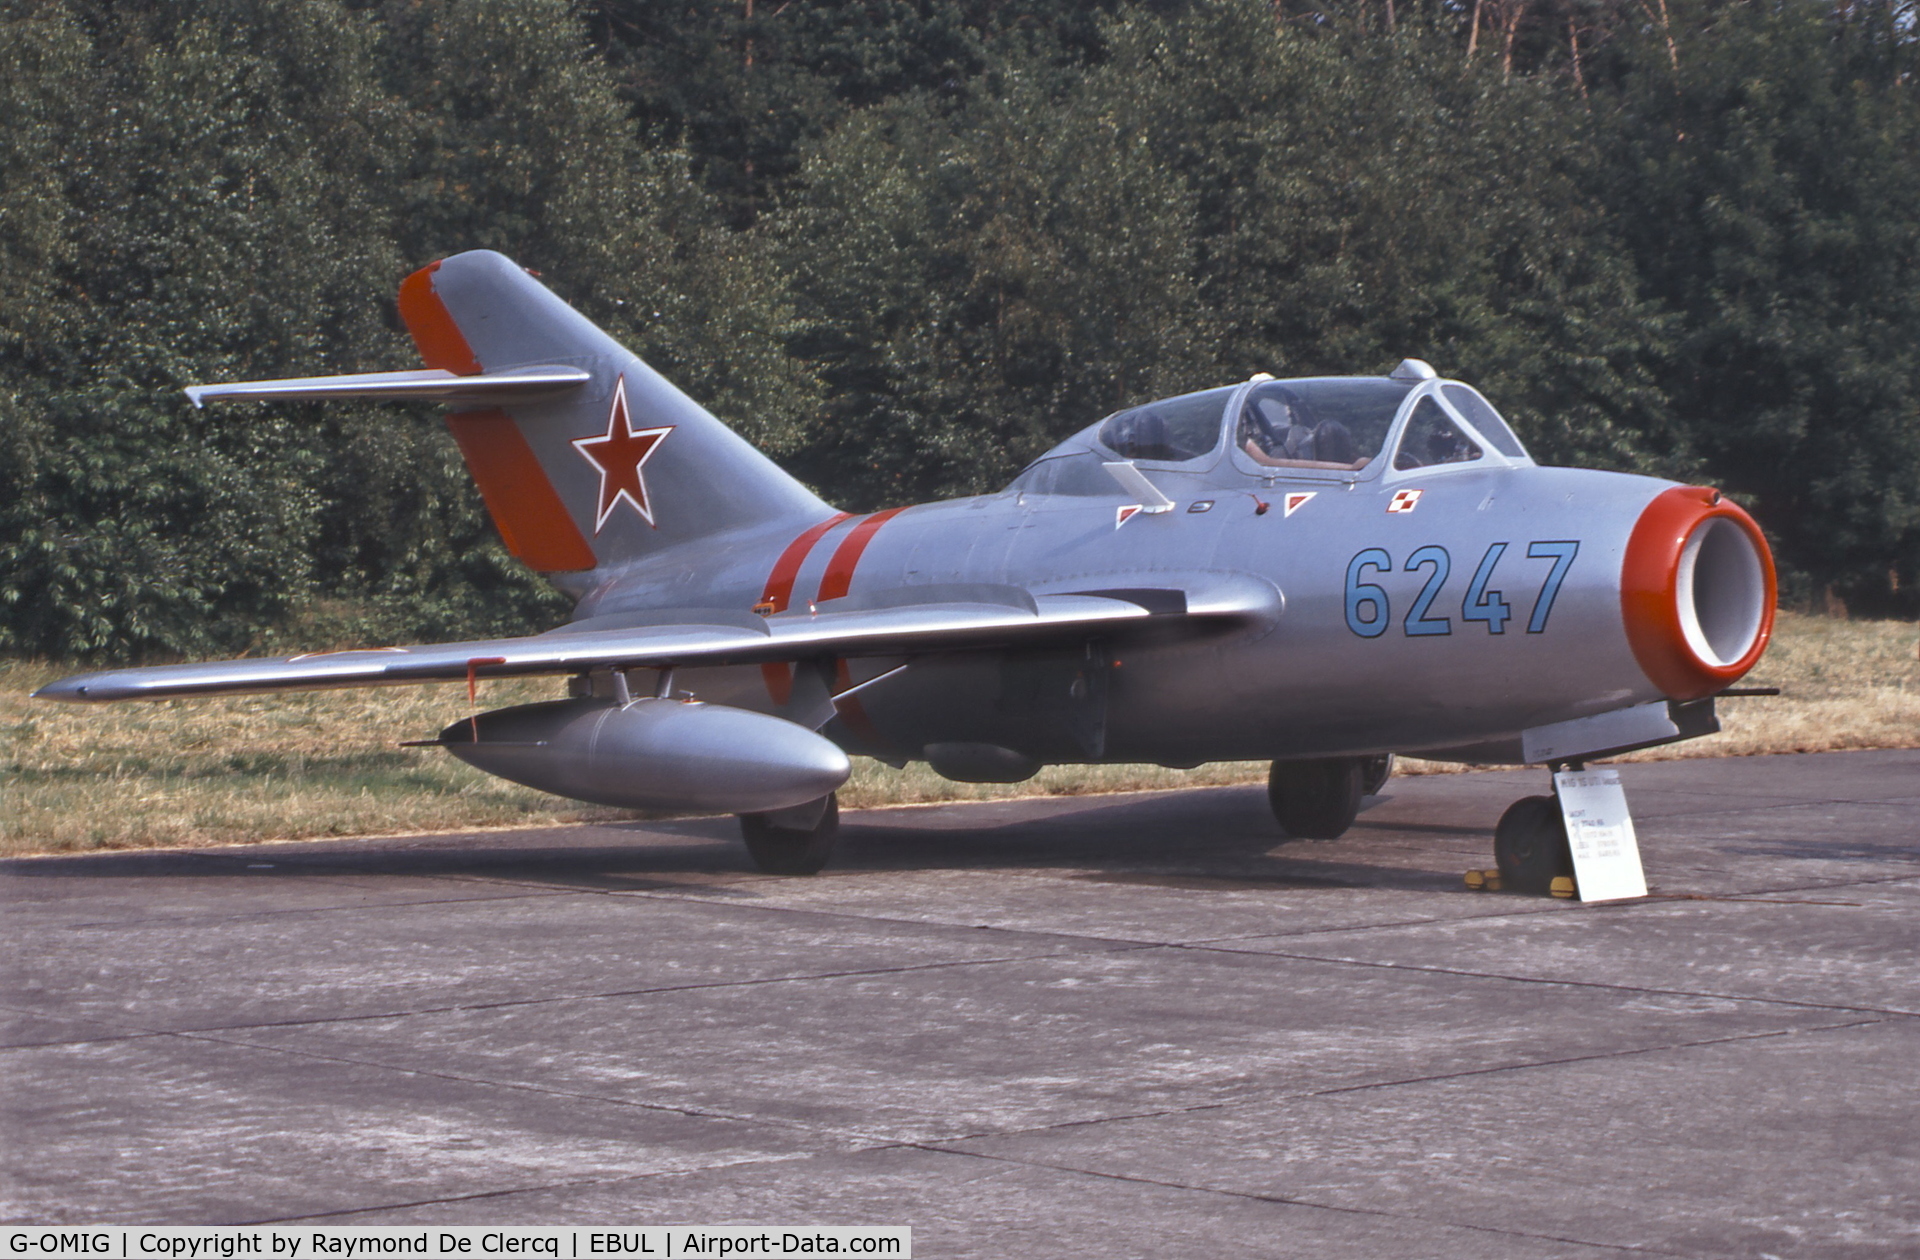 G-OMIG, 1956 PZL-Mielec SBLim-2 (MiG-15UTI) C/N 622047, At the Ursel airshow in july 1995.